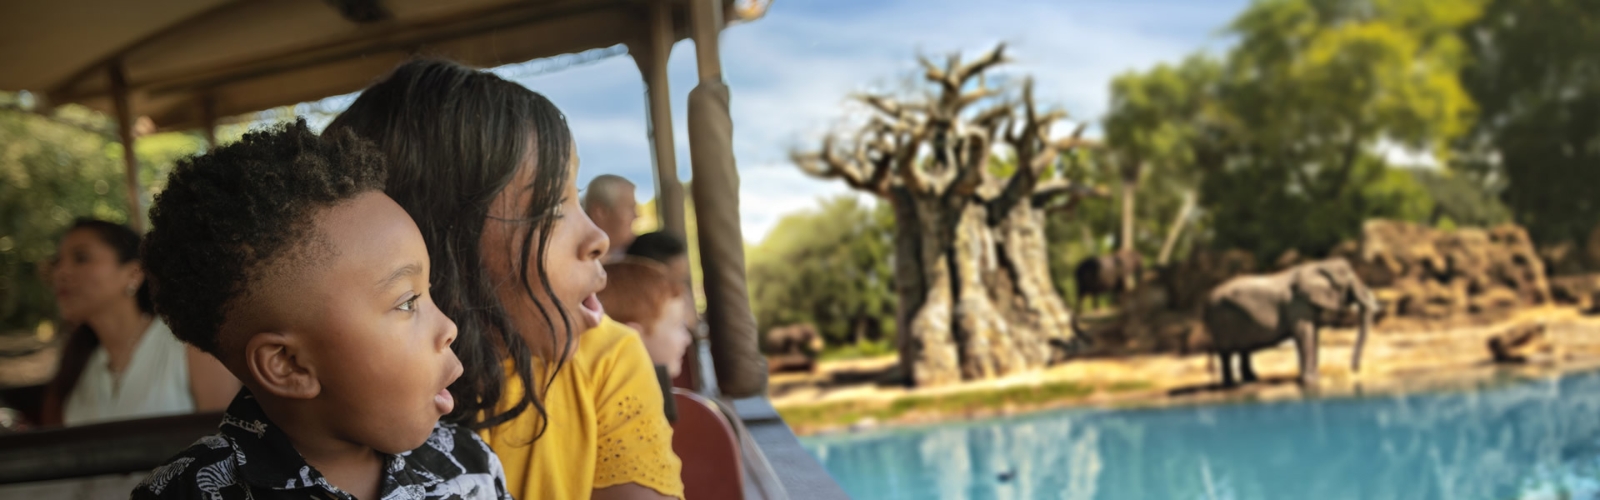 Disney's Animal Kingdom Theme Park | Walt Disney World Resort | Virgin  Atlantic Holidays